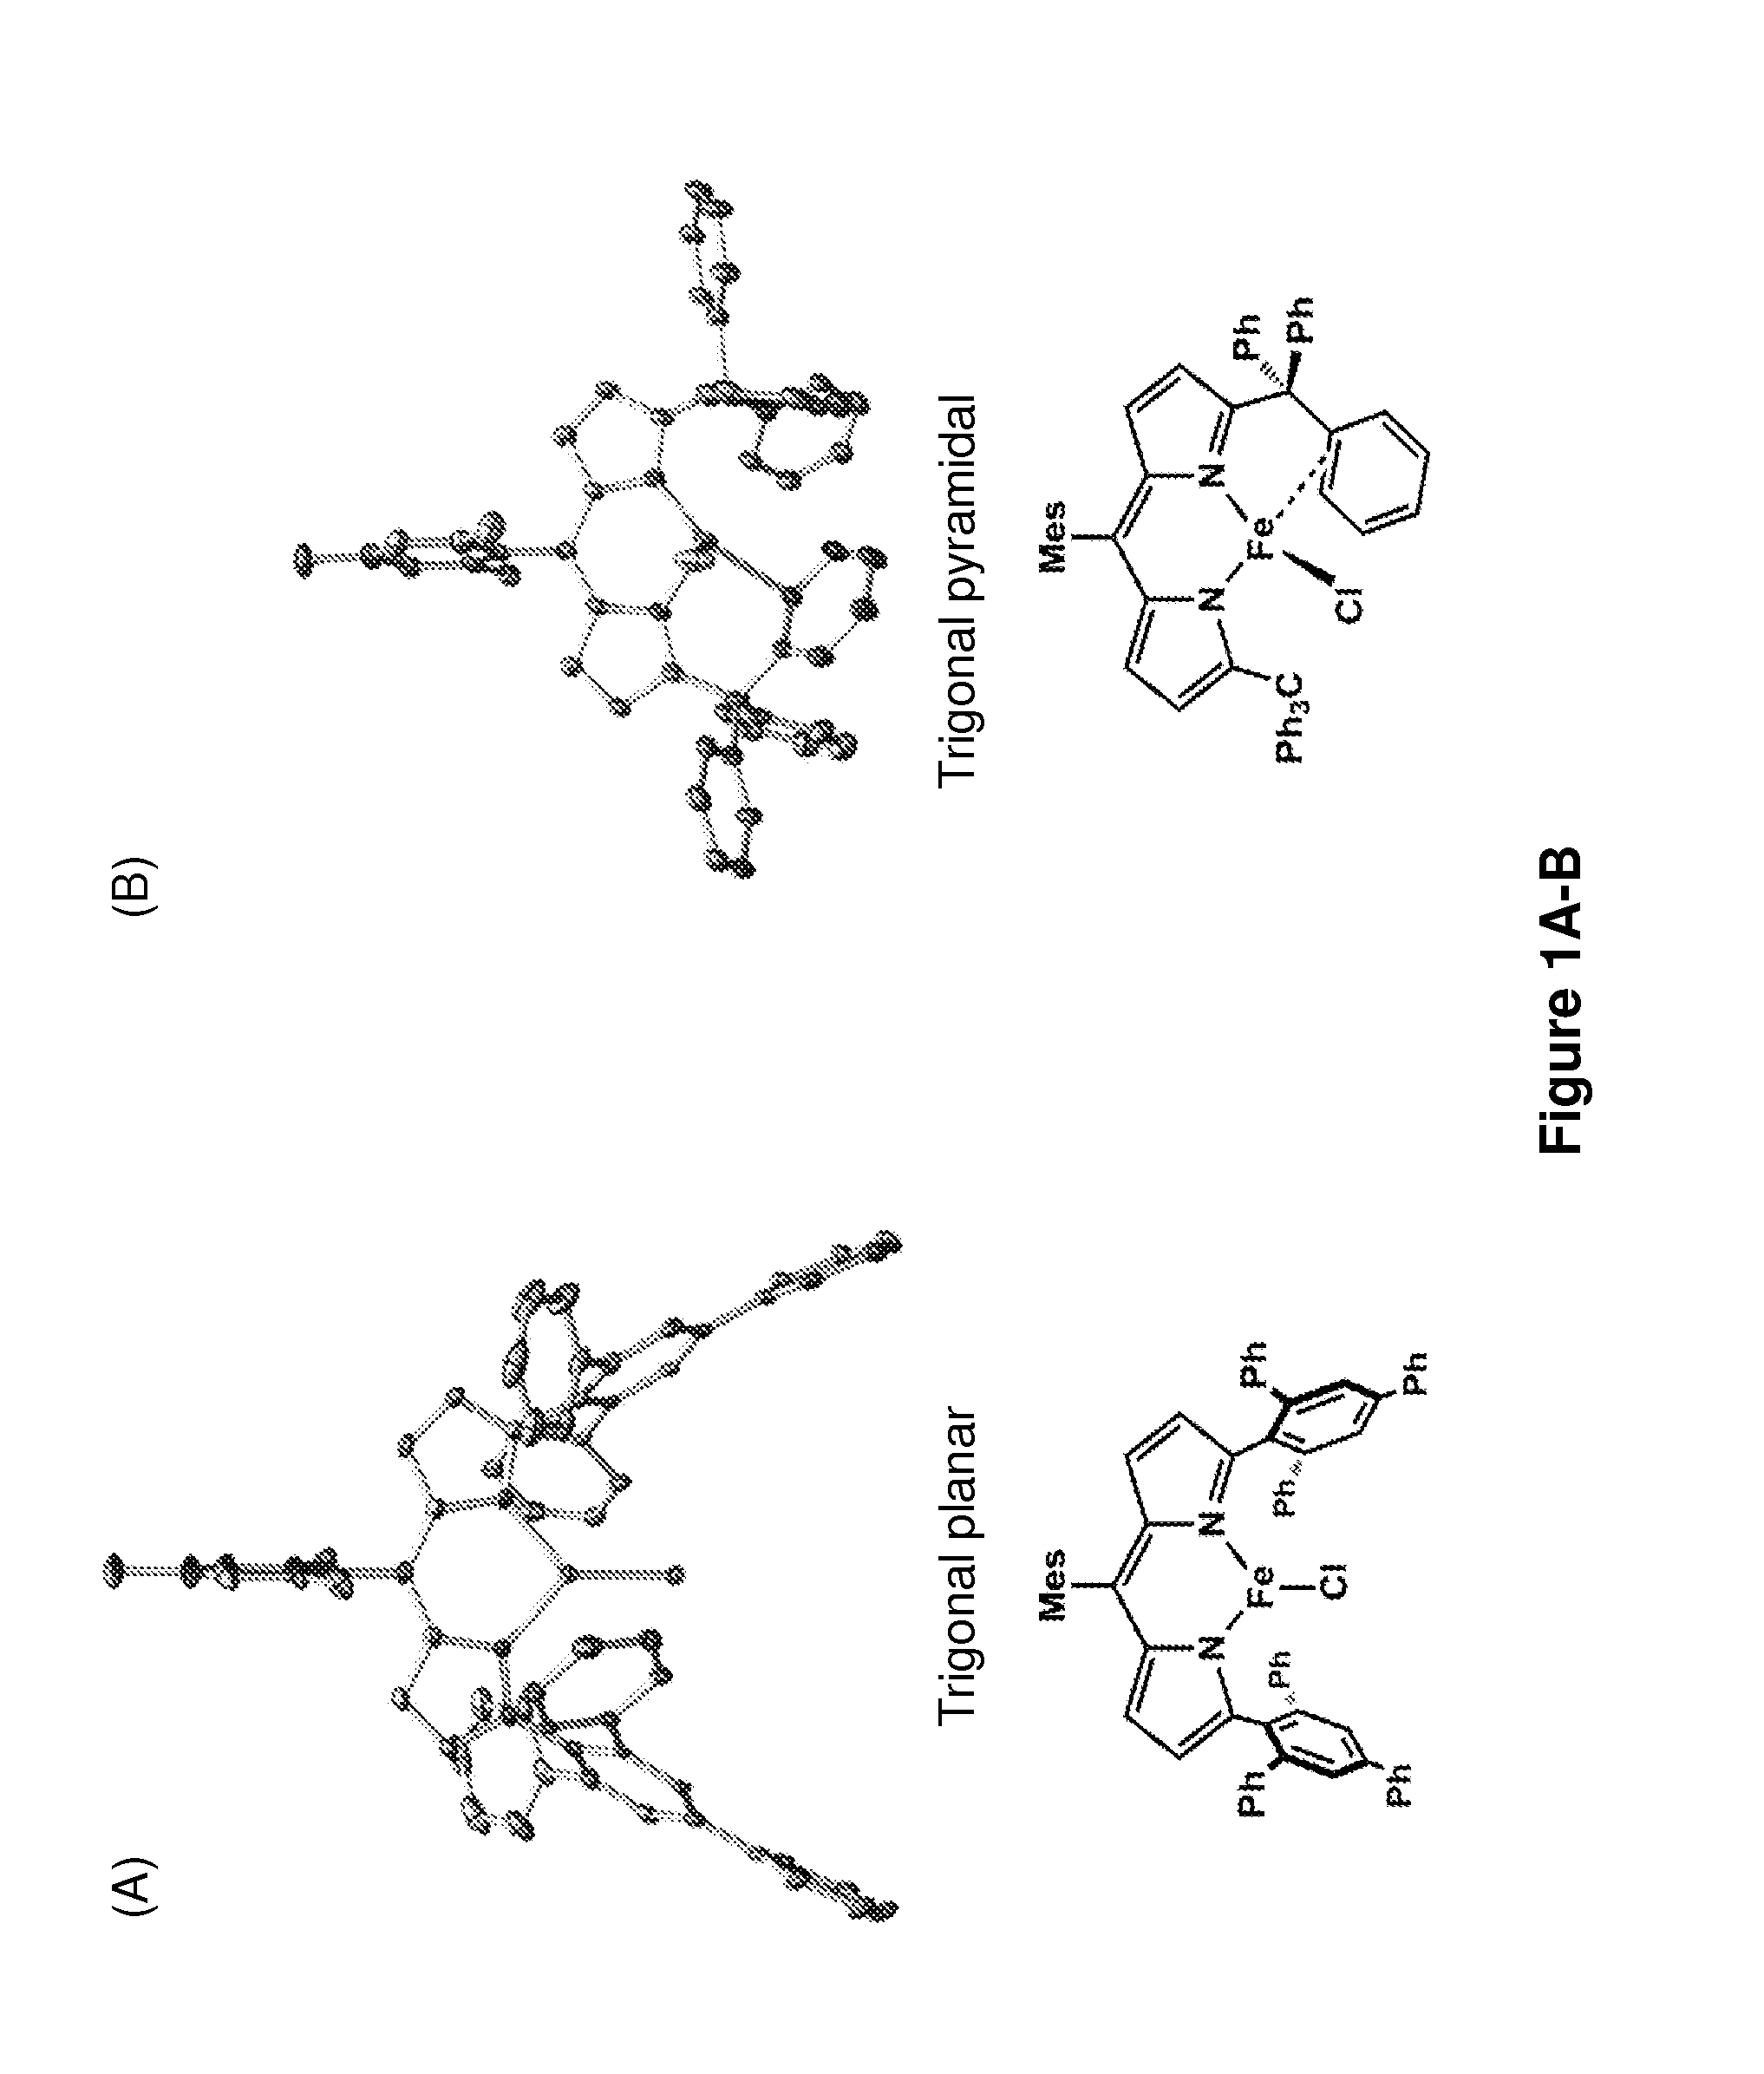 Synthesis of acyclic and cyclic amines using iron-catalyzed nitrene group transfer